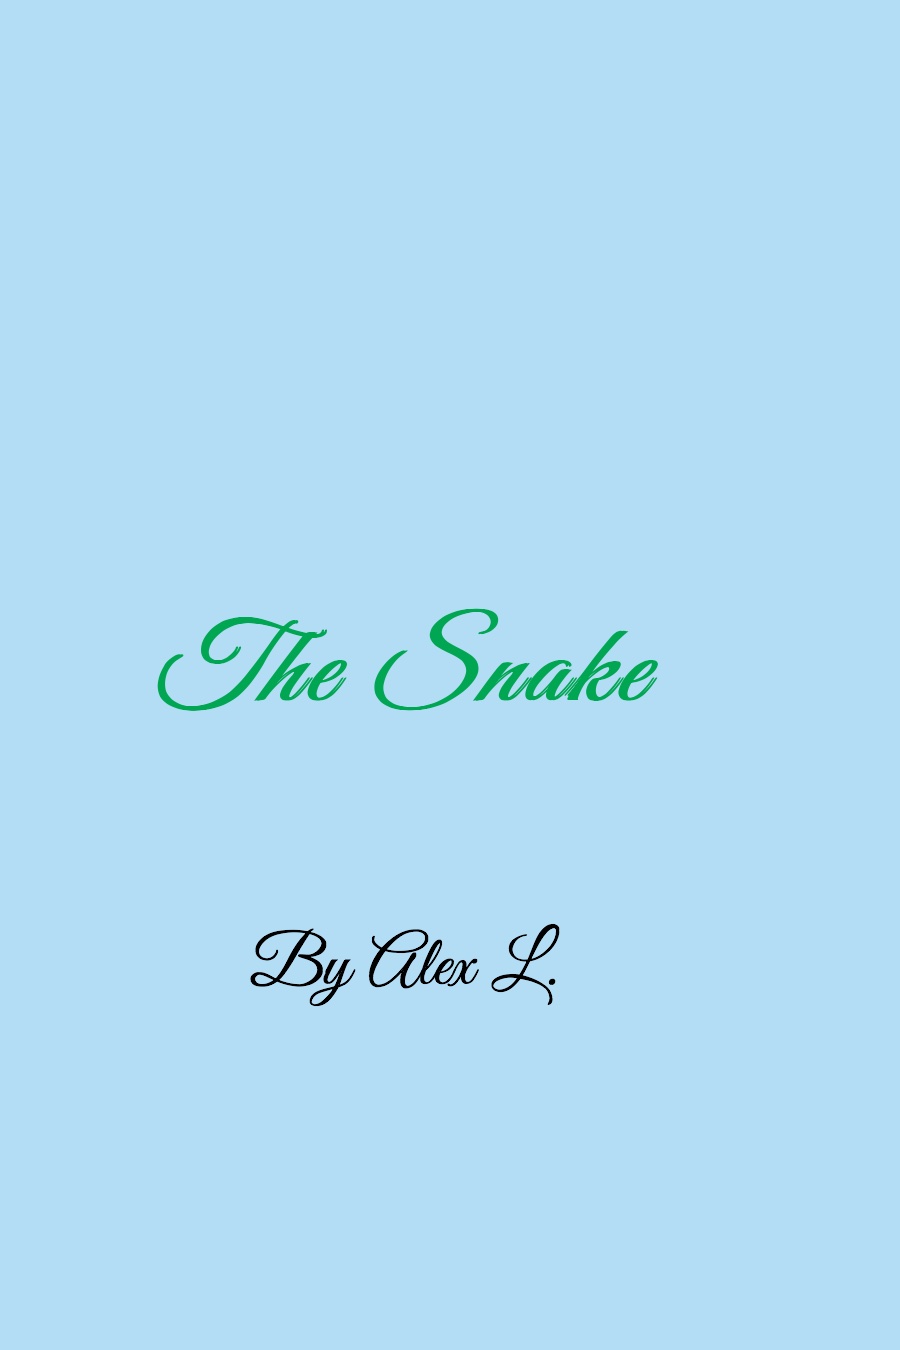 The snake by Alex I